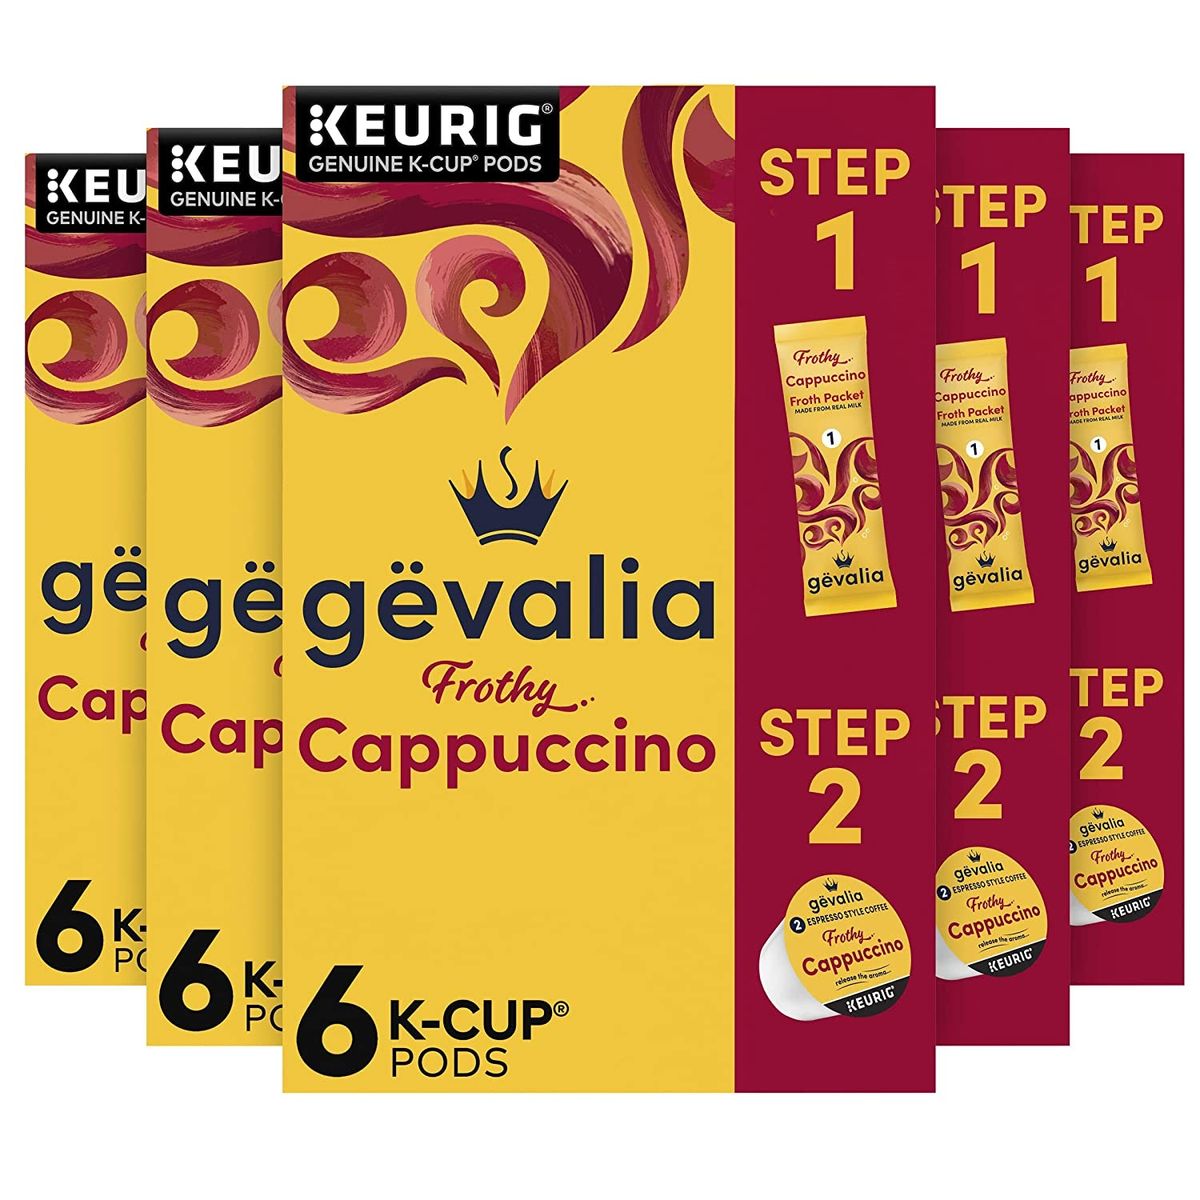 4 parasta Cappuccino K-Cupia